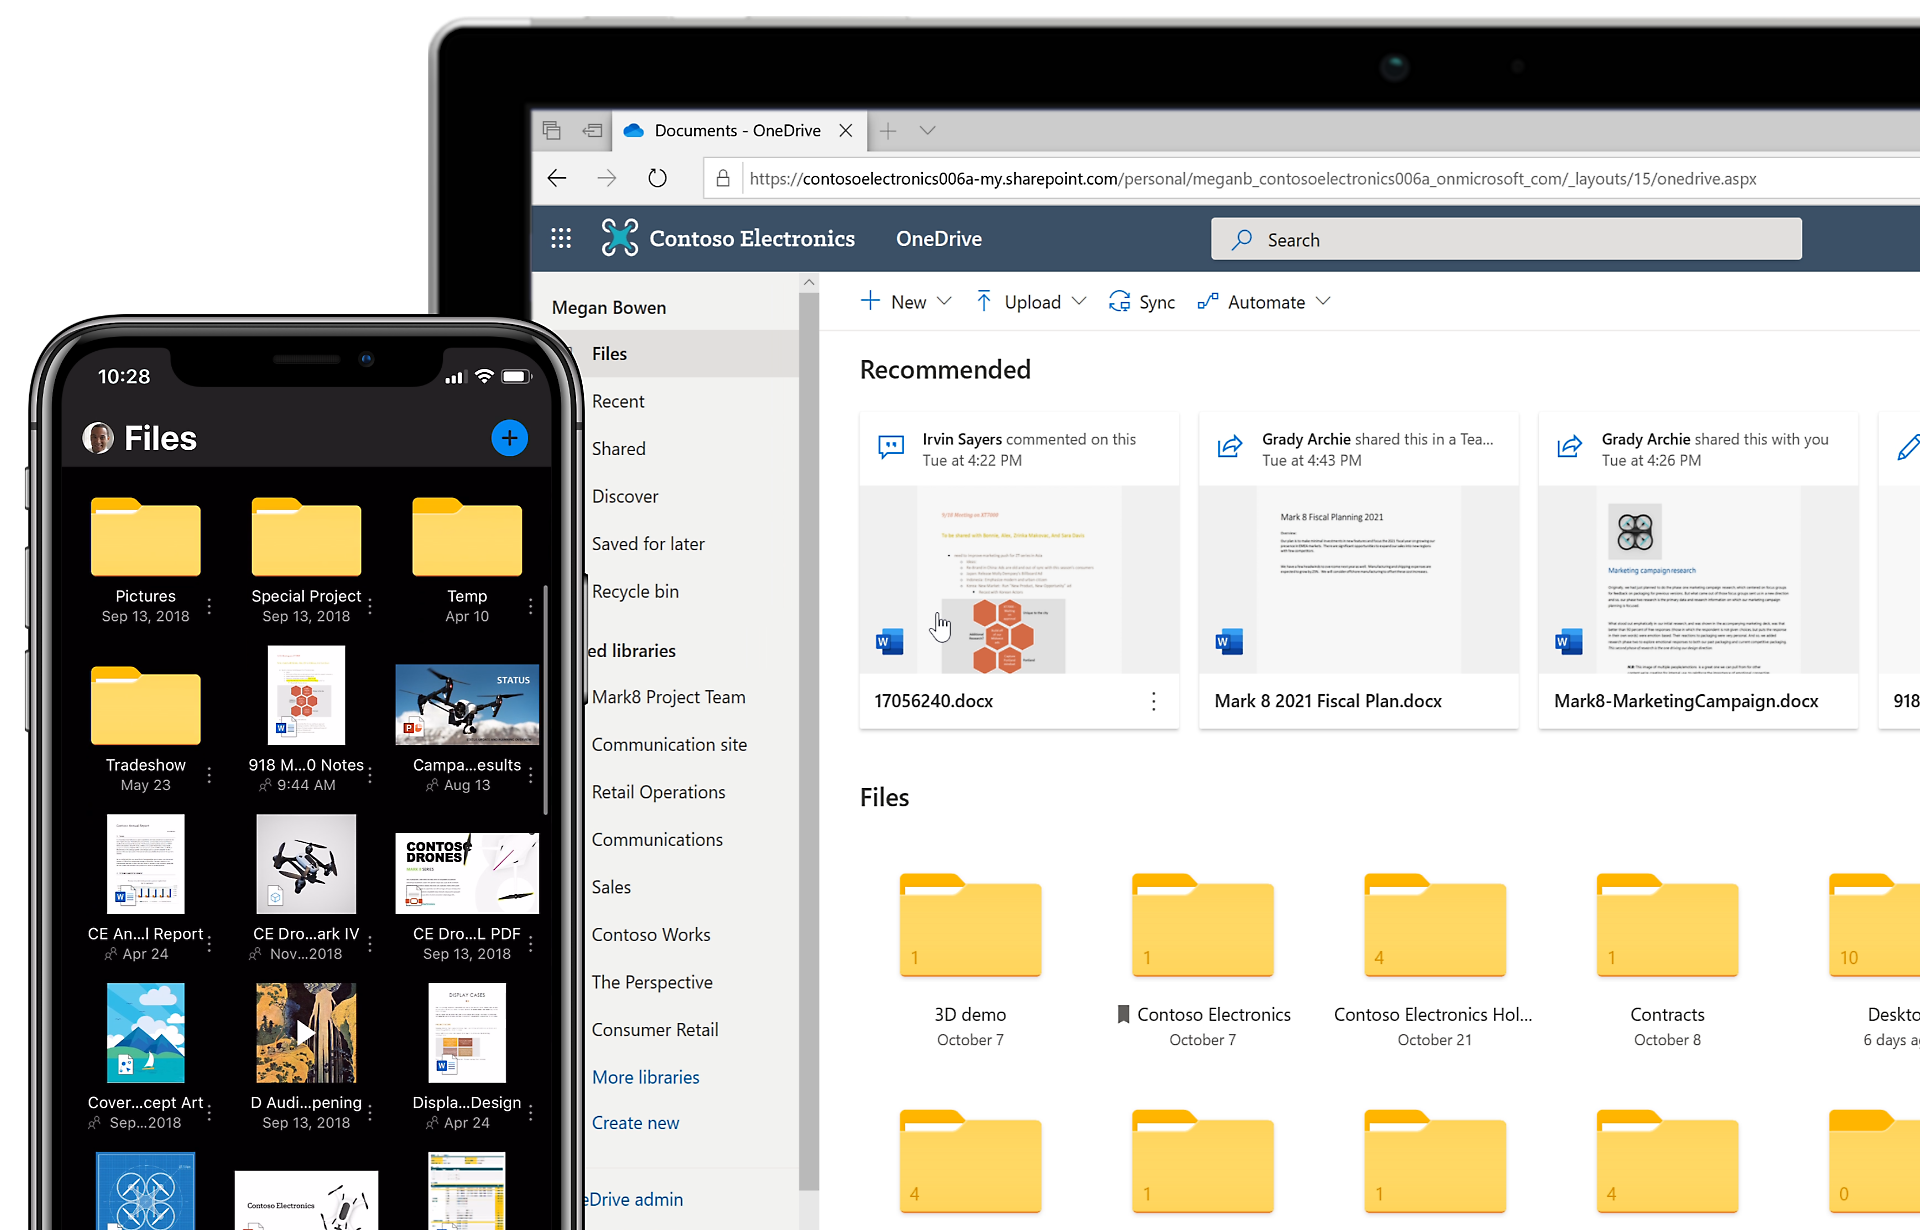 Microsoft OneDrive Review